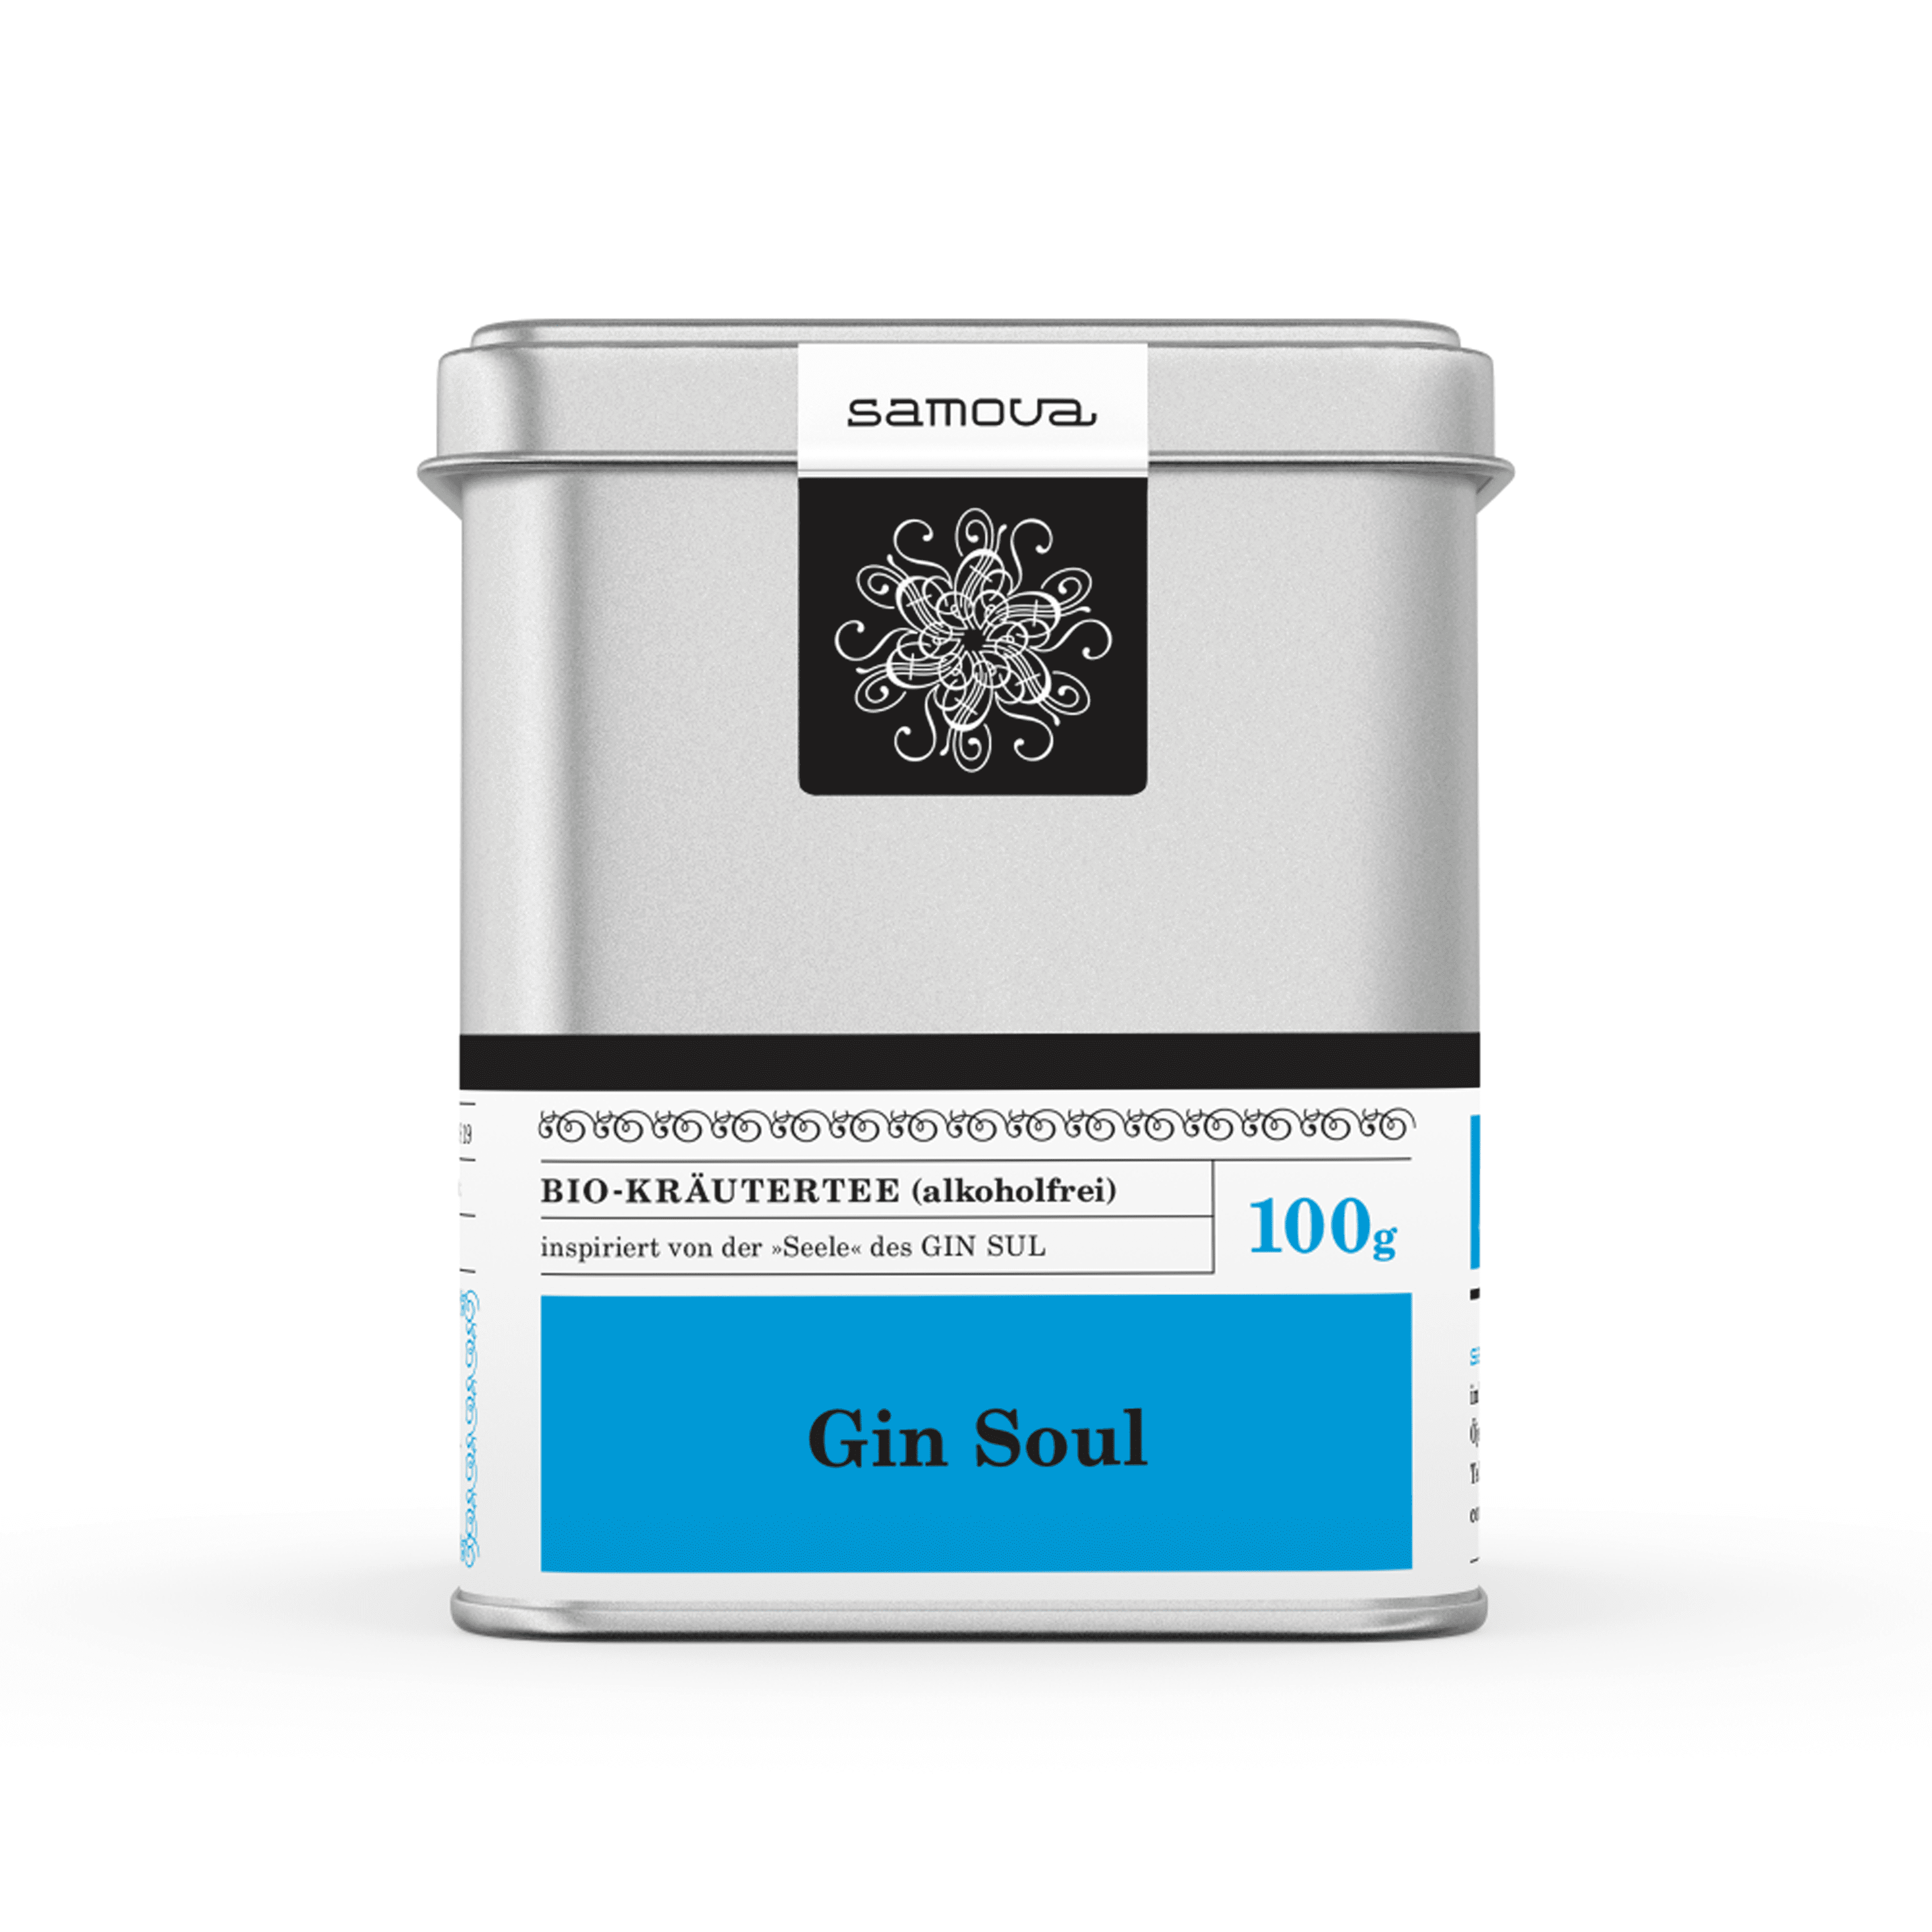 Can of Gin Soul tea